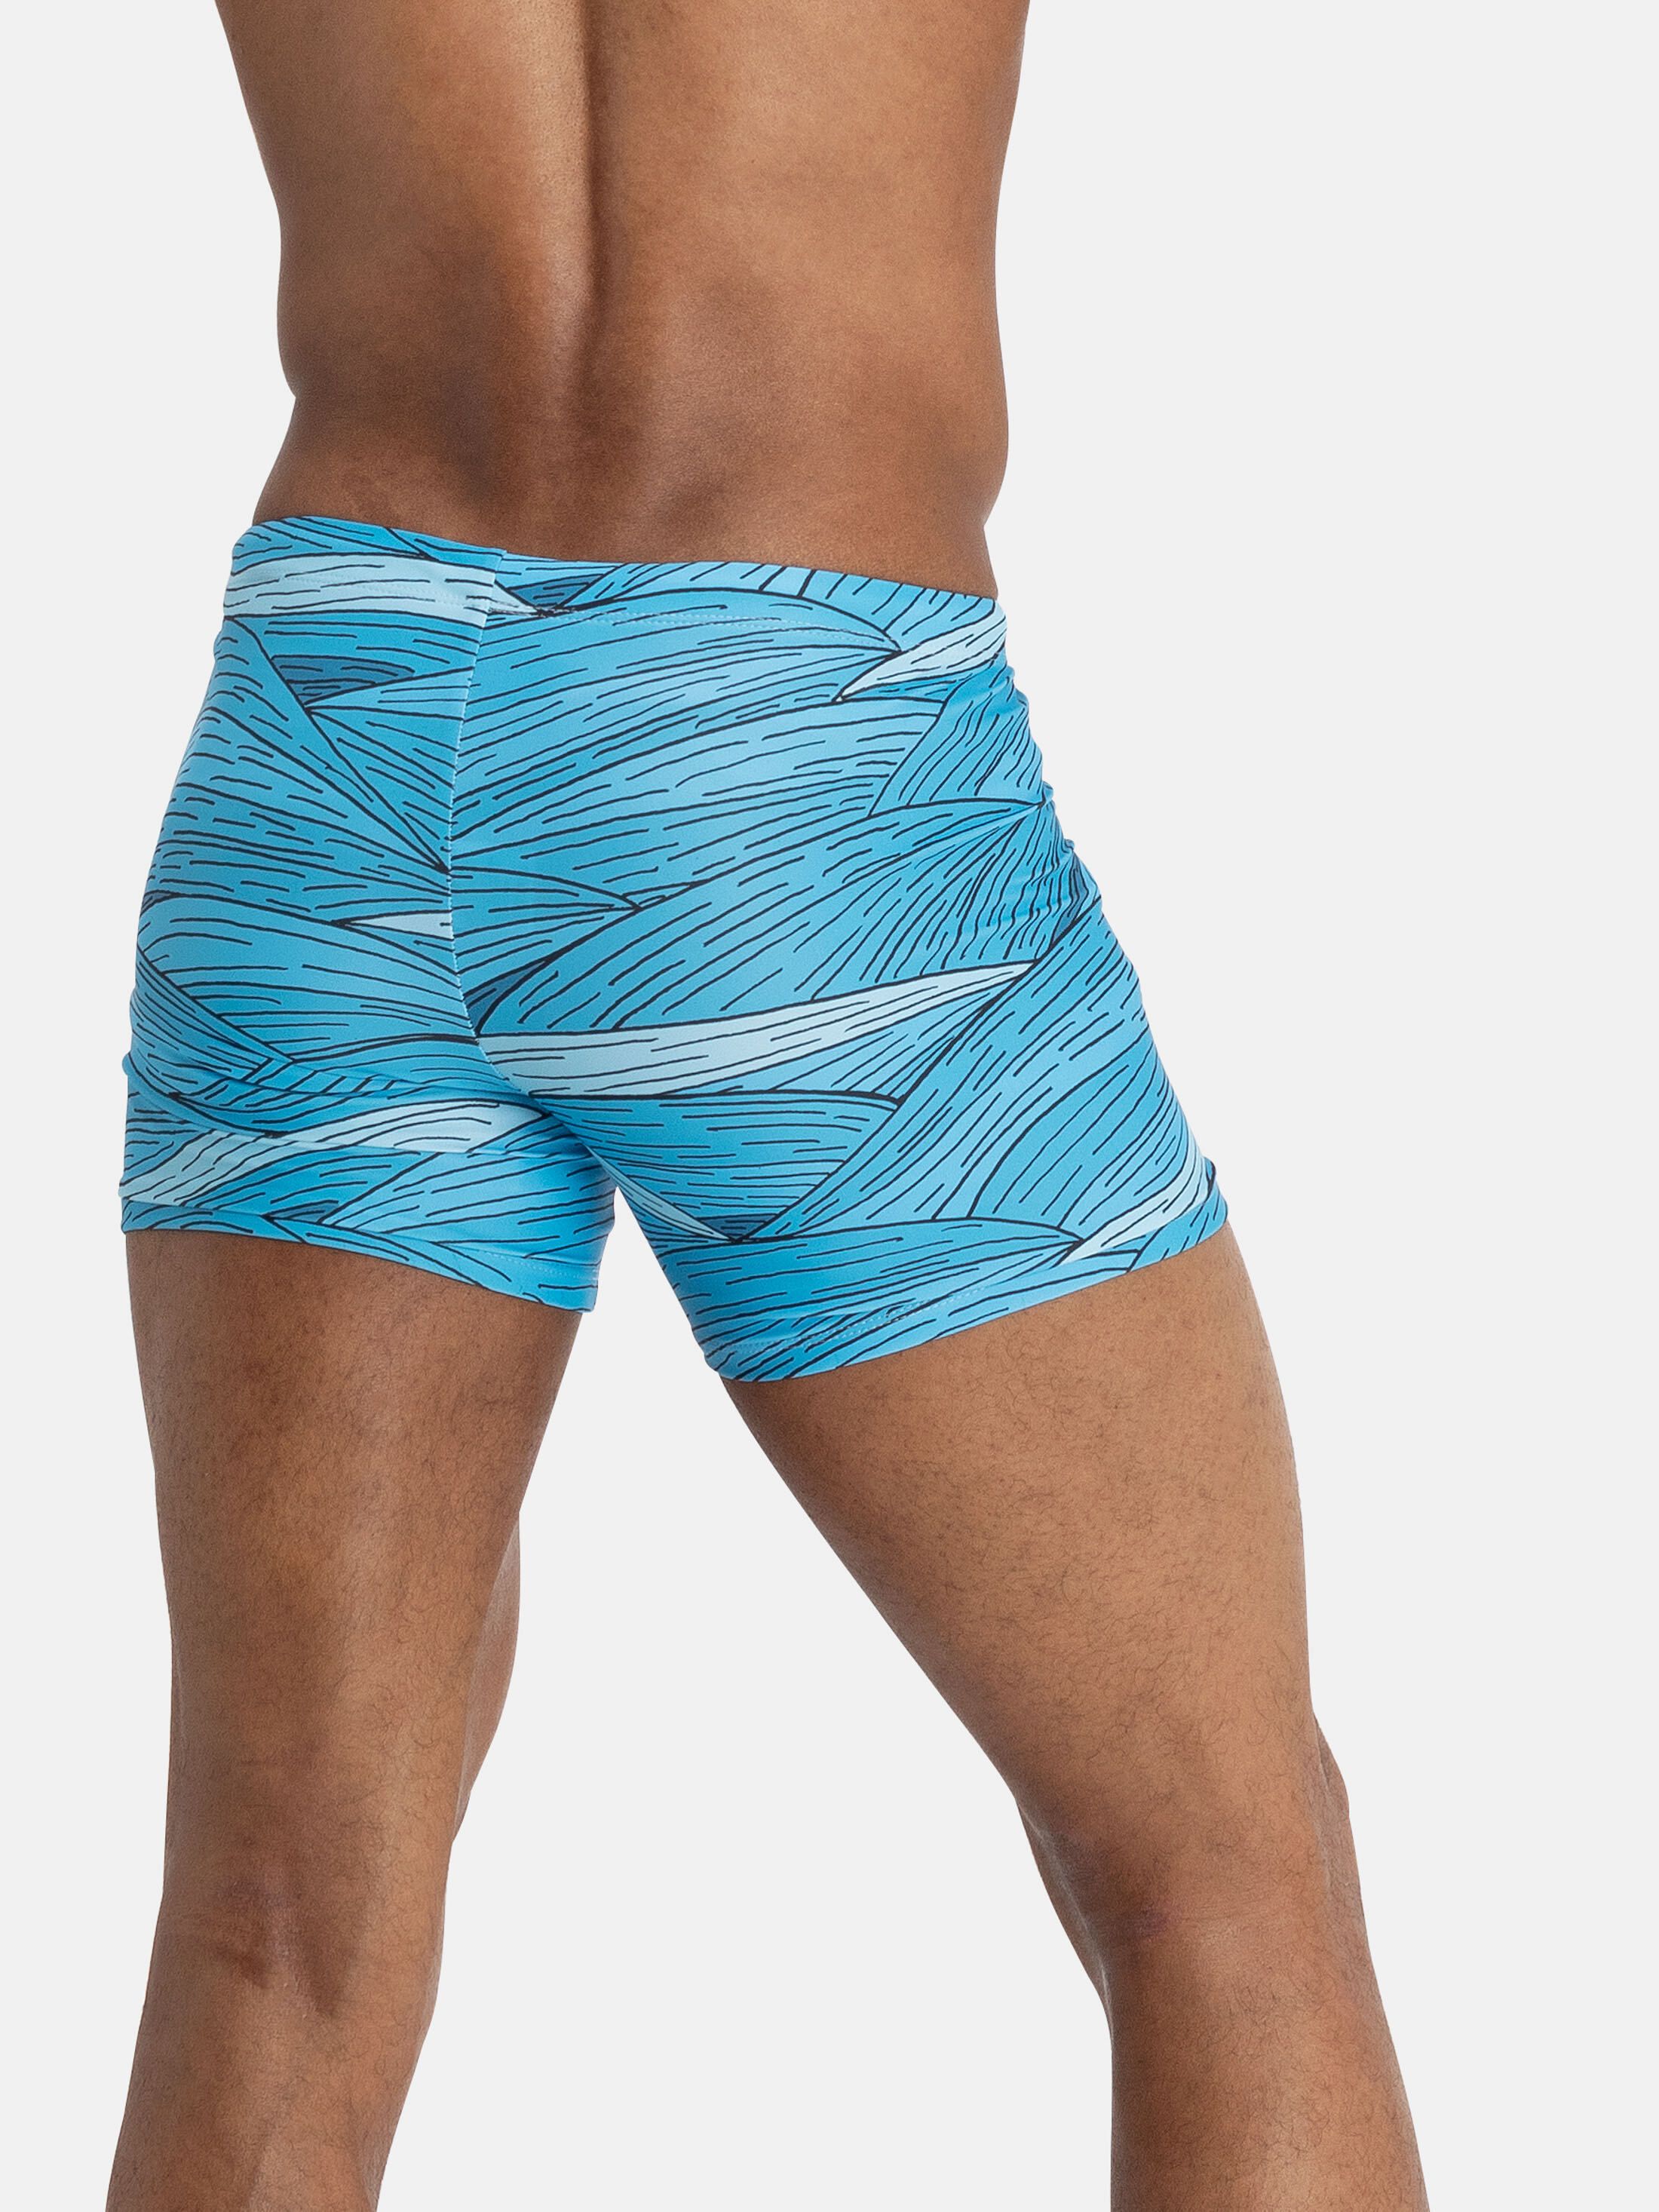 personalised printed swimming trunks